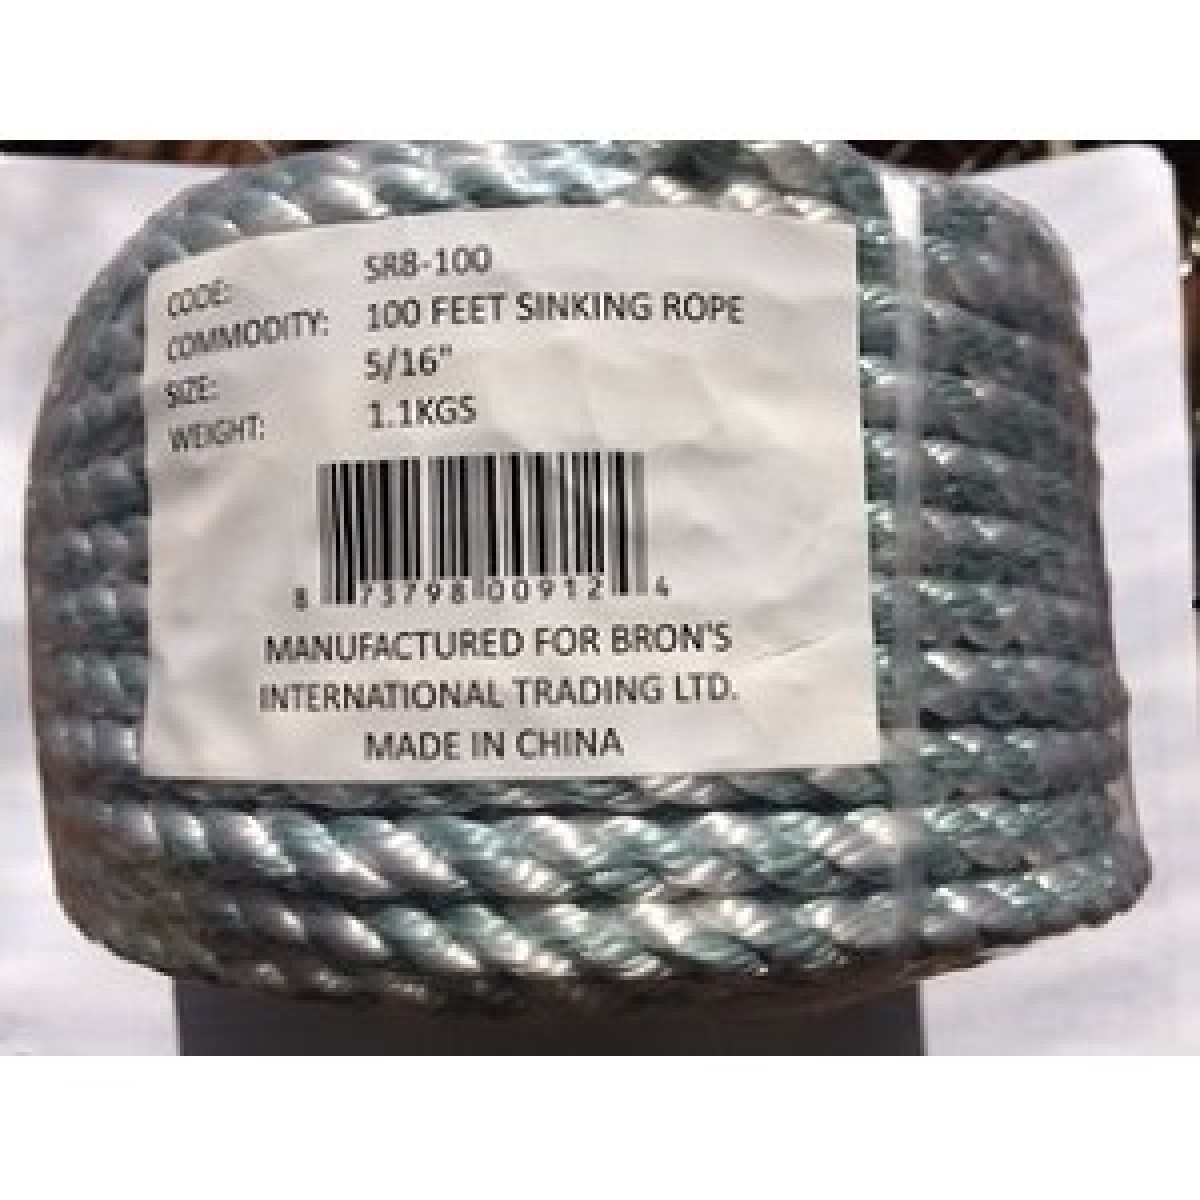 Brons Sinking Rope 100ft 5/16 - SR8-100